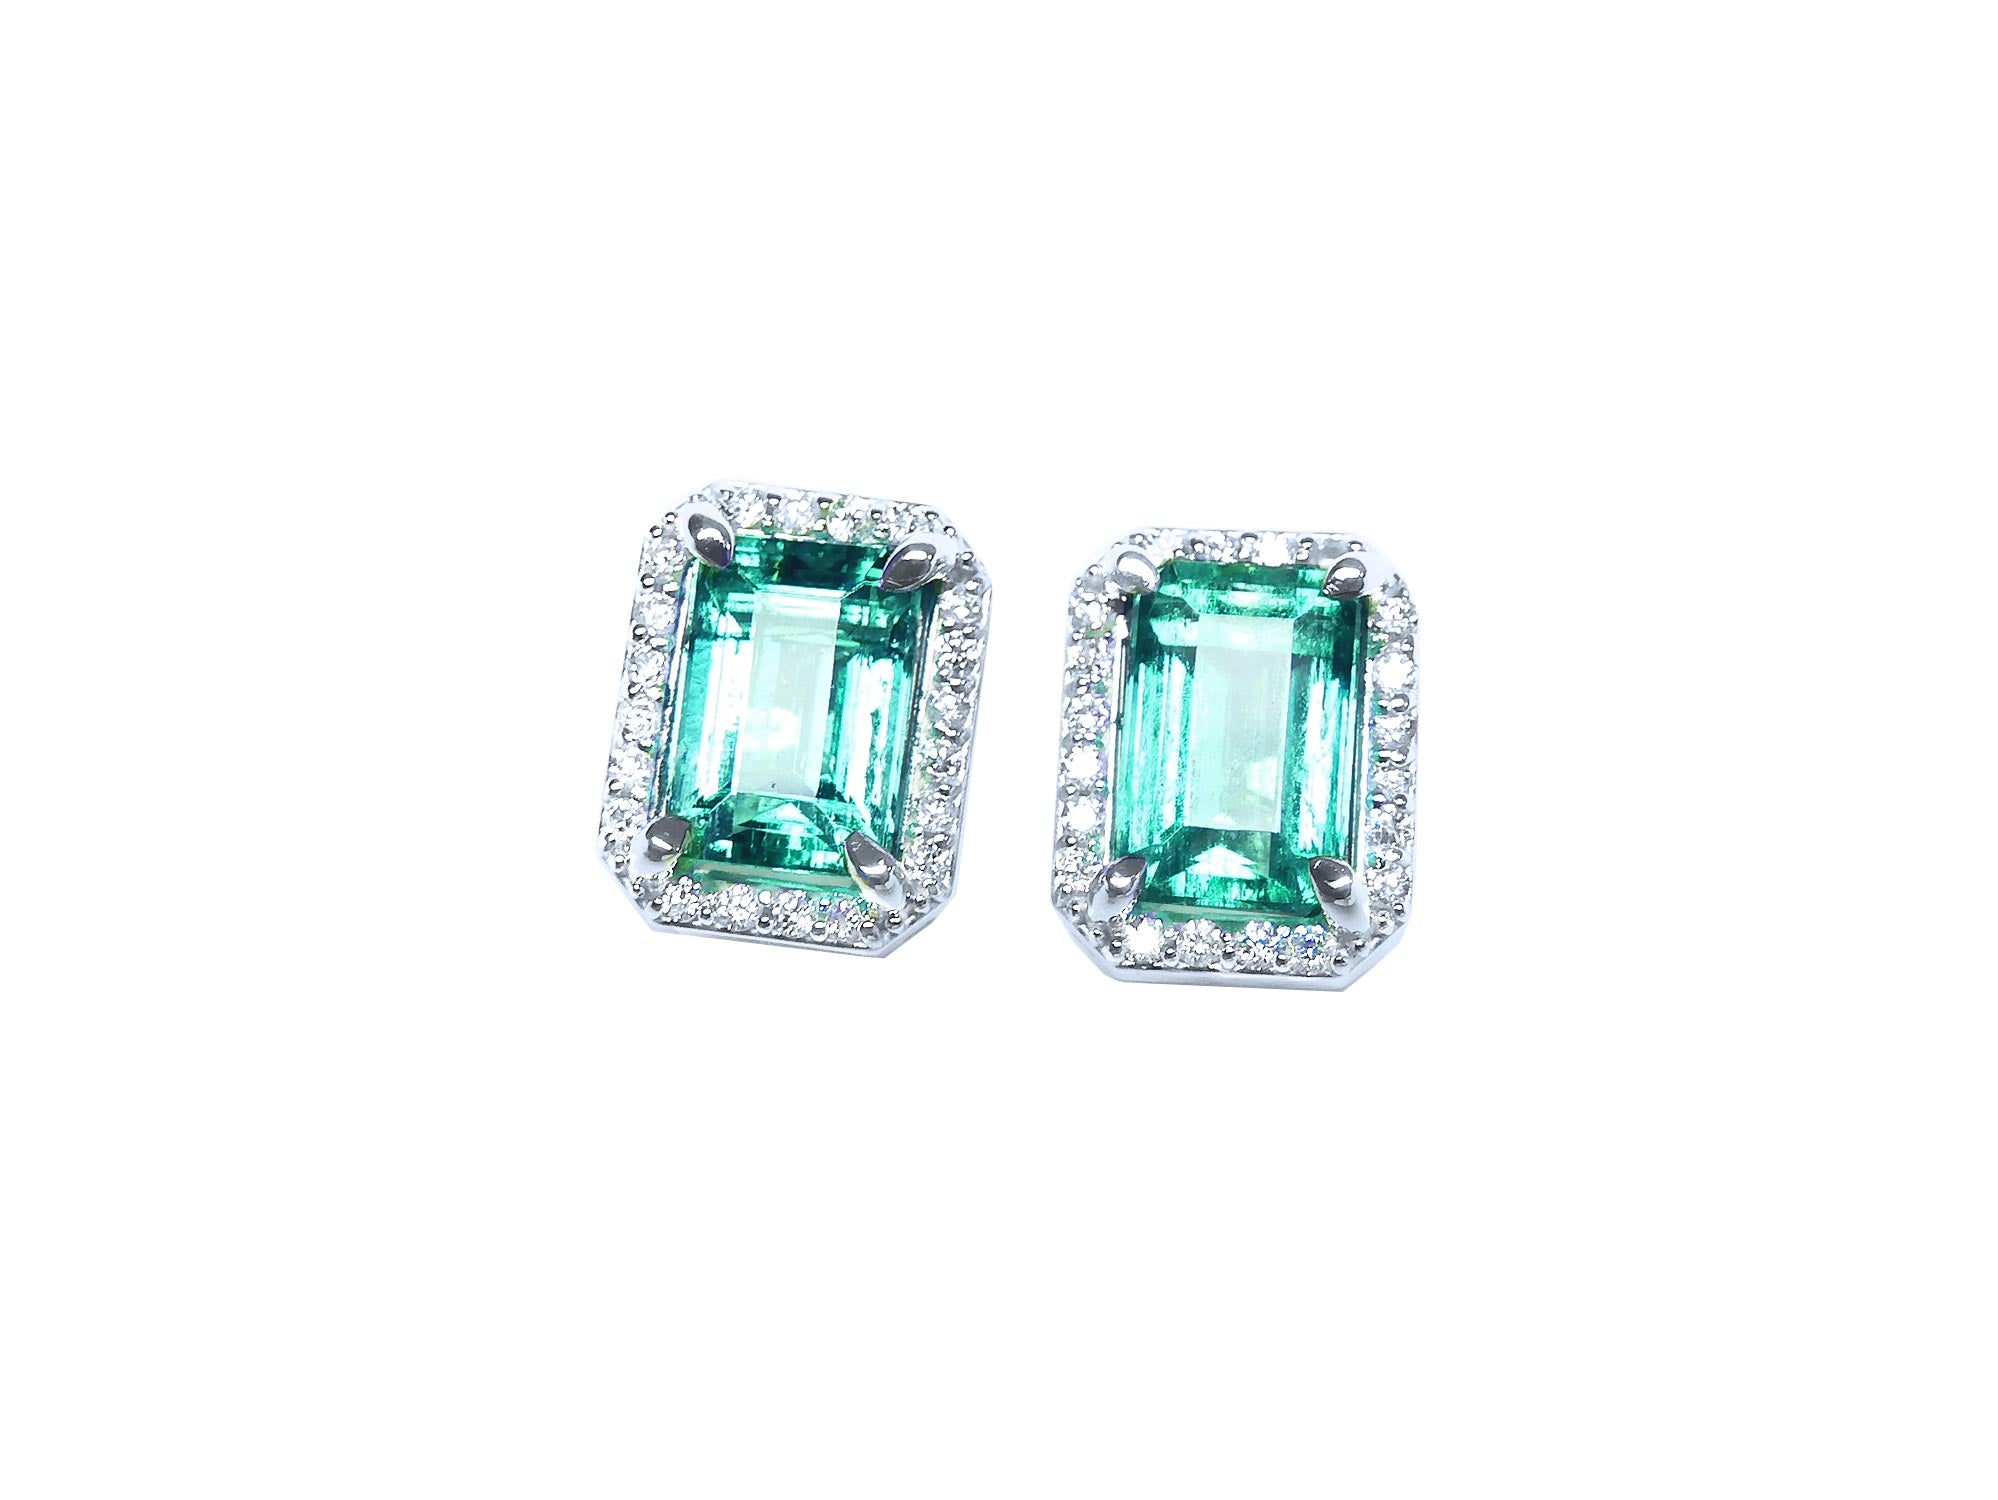 Real emerald-cut emerald stud earrings